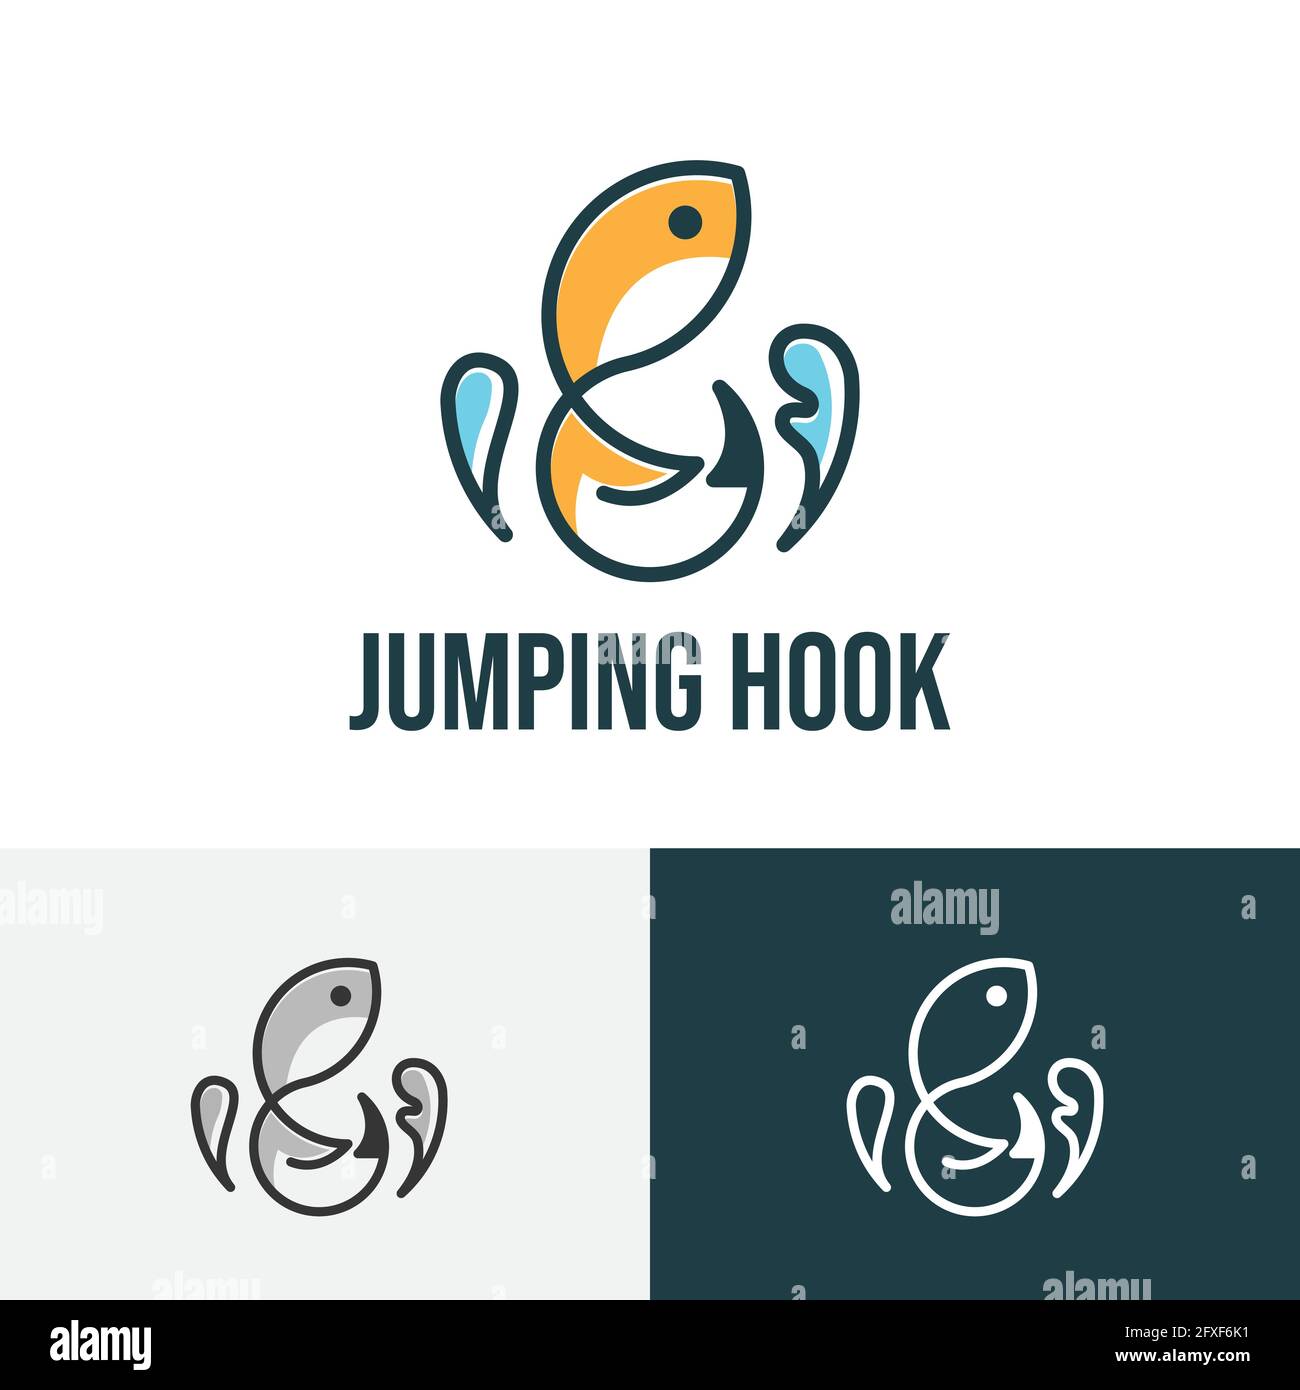 Jumping Hook Fishing Gear Club Equipment Logo Stock Vector